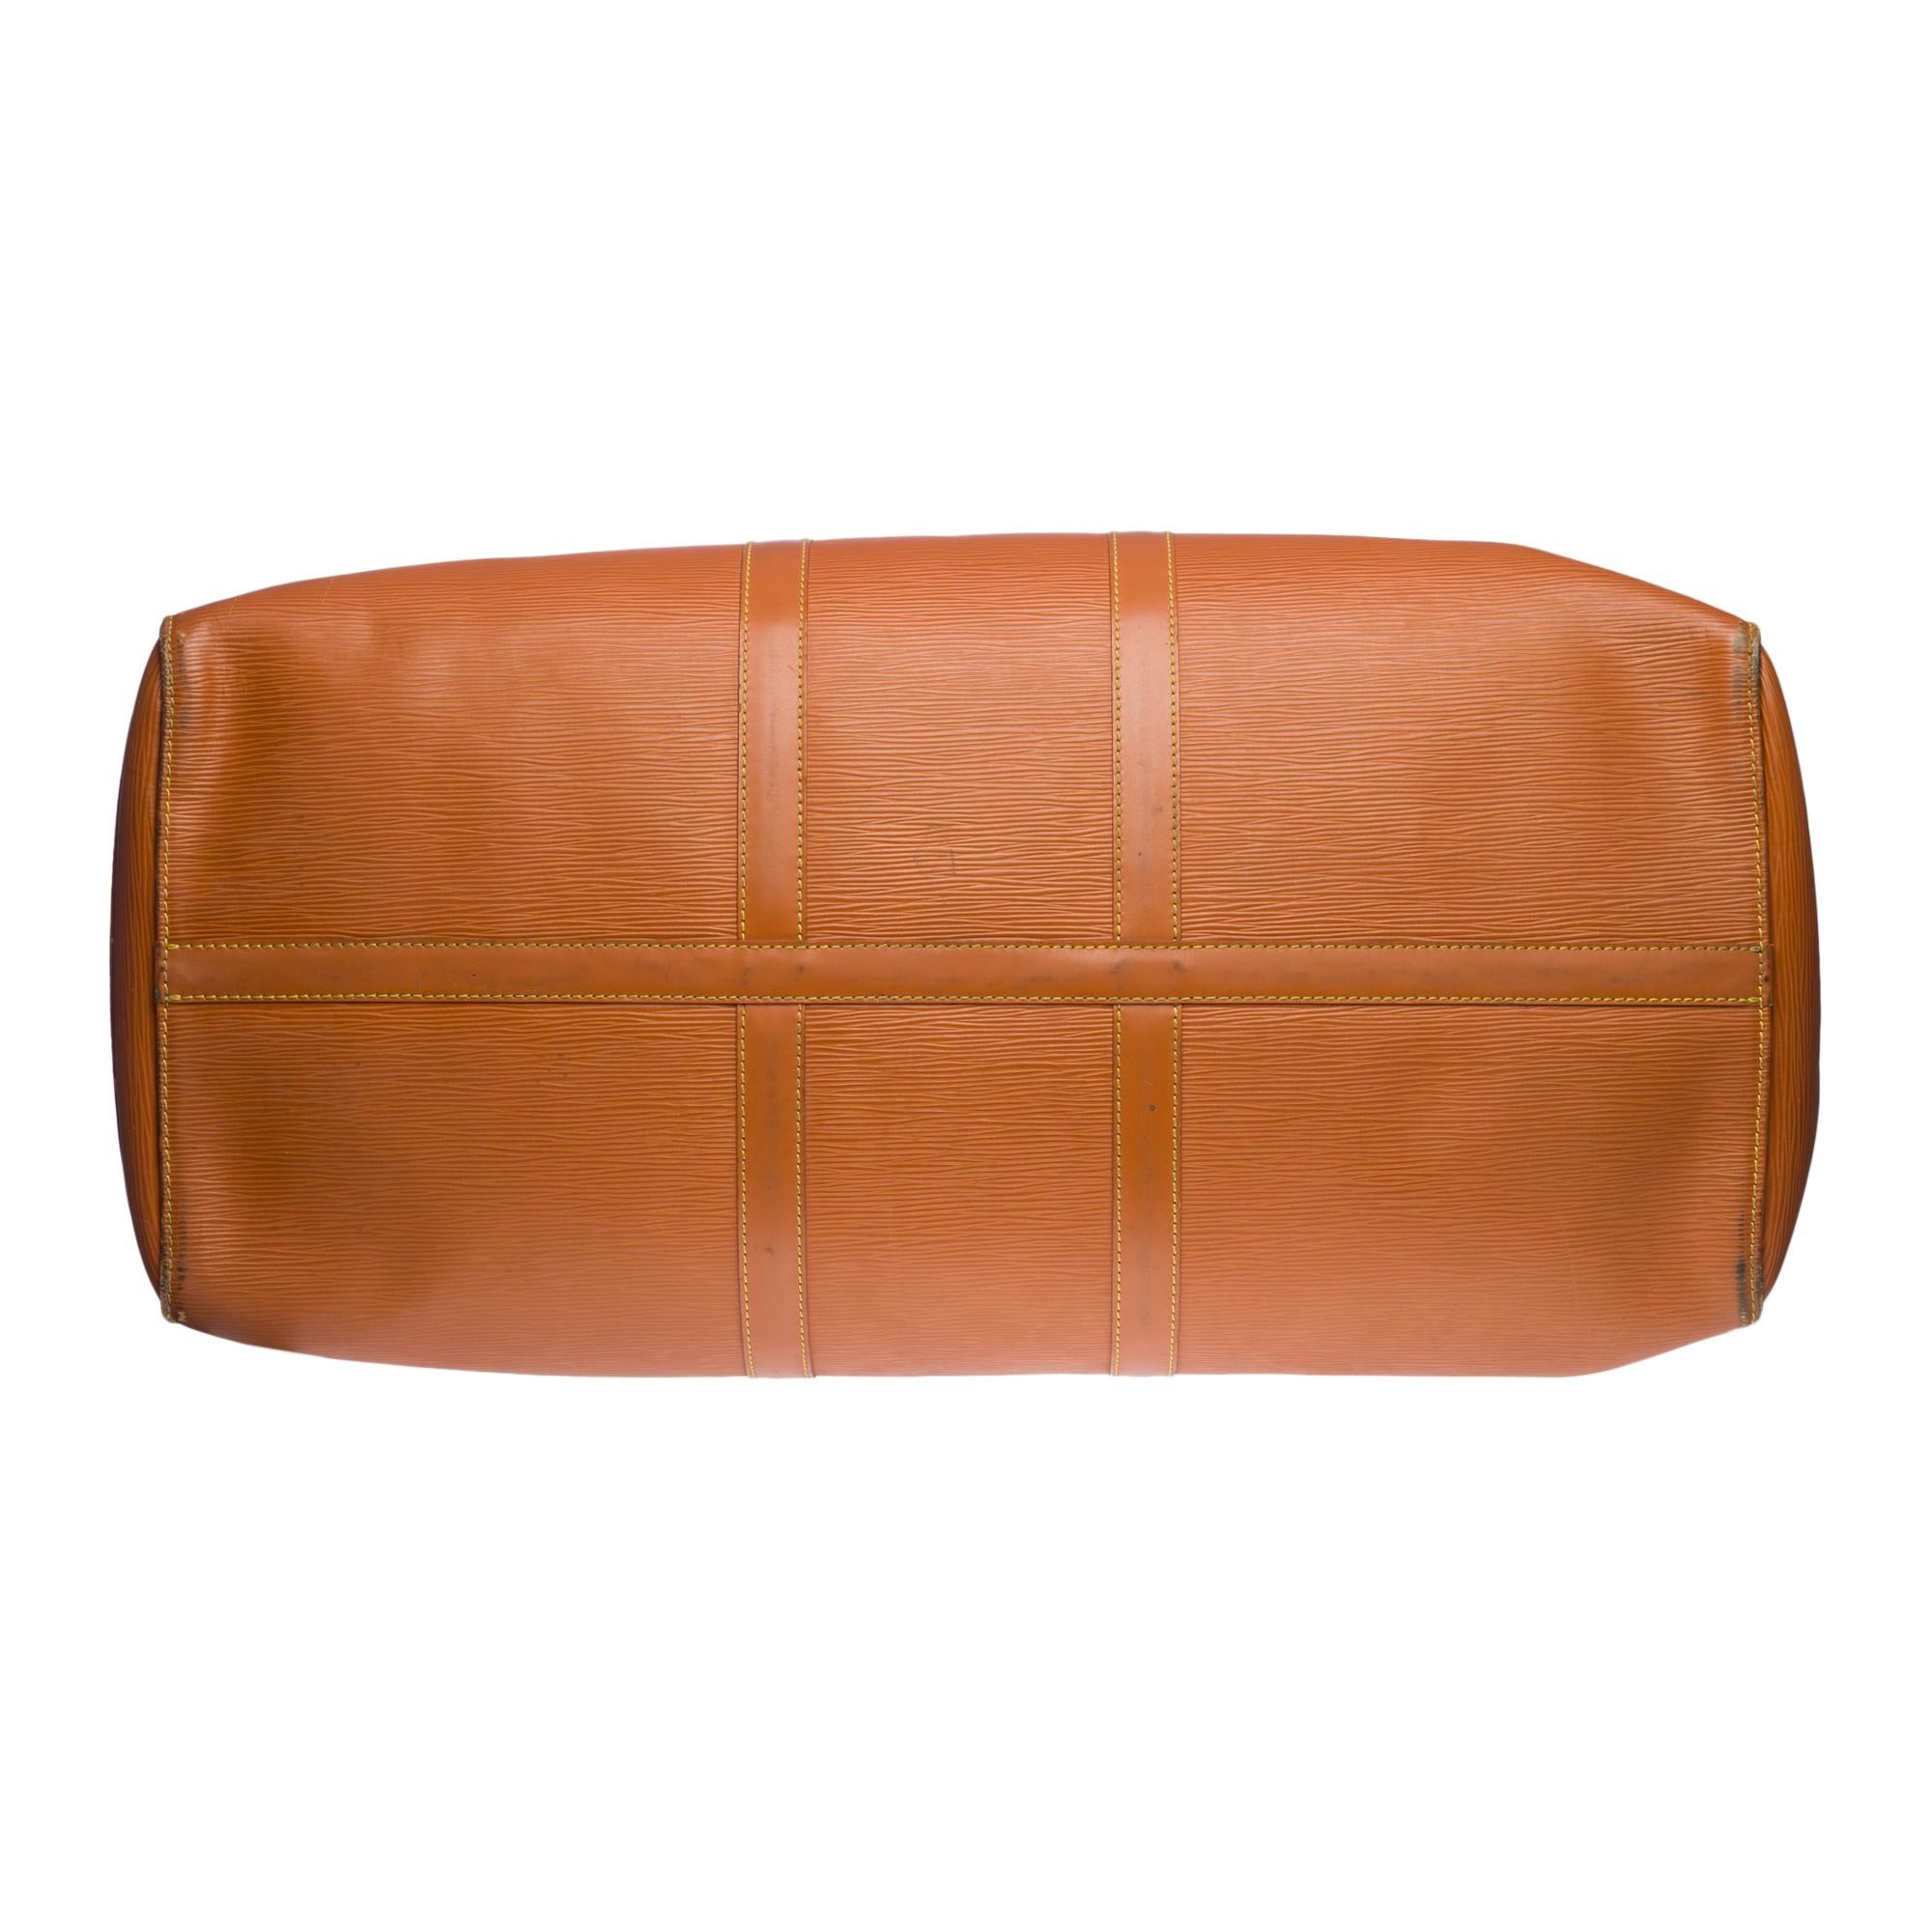 Louis Vuitton Keepall 55 Travel bag in cognac épi leather 4